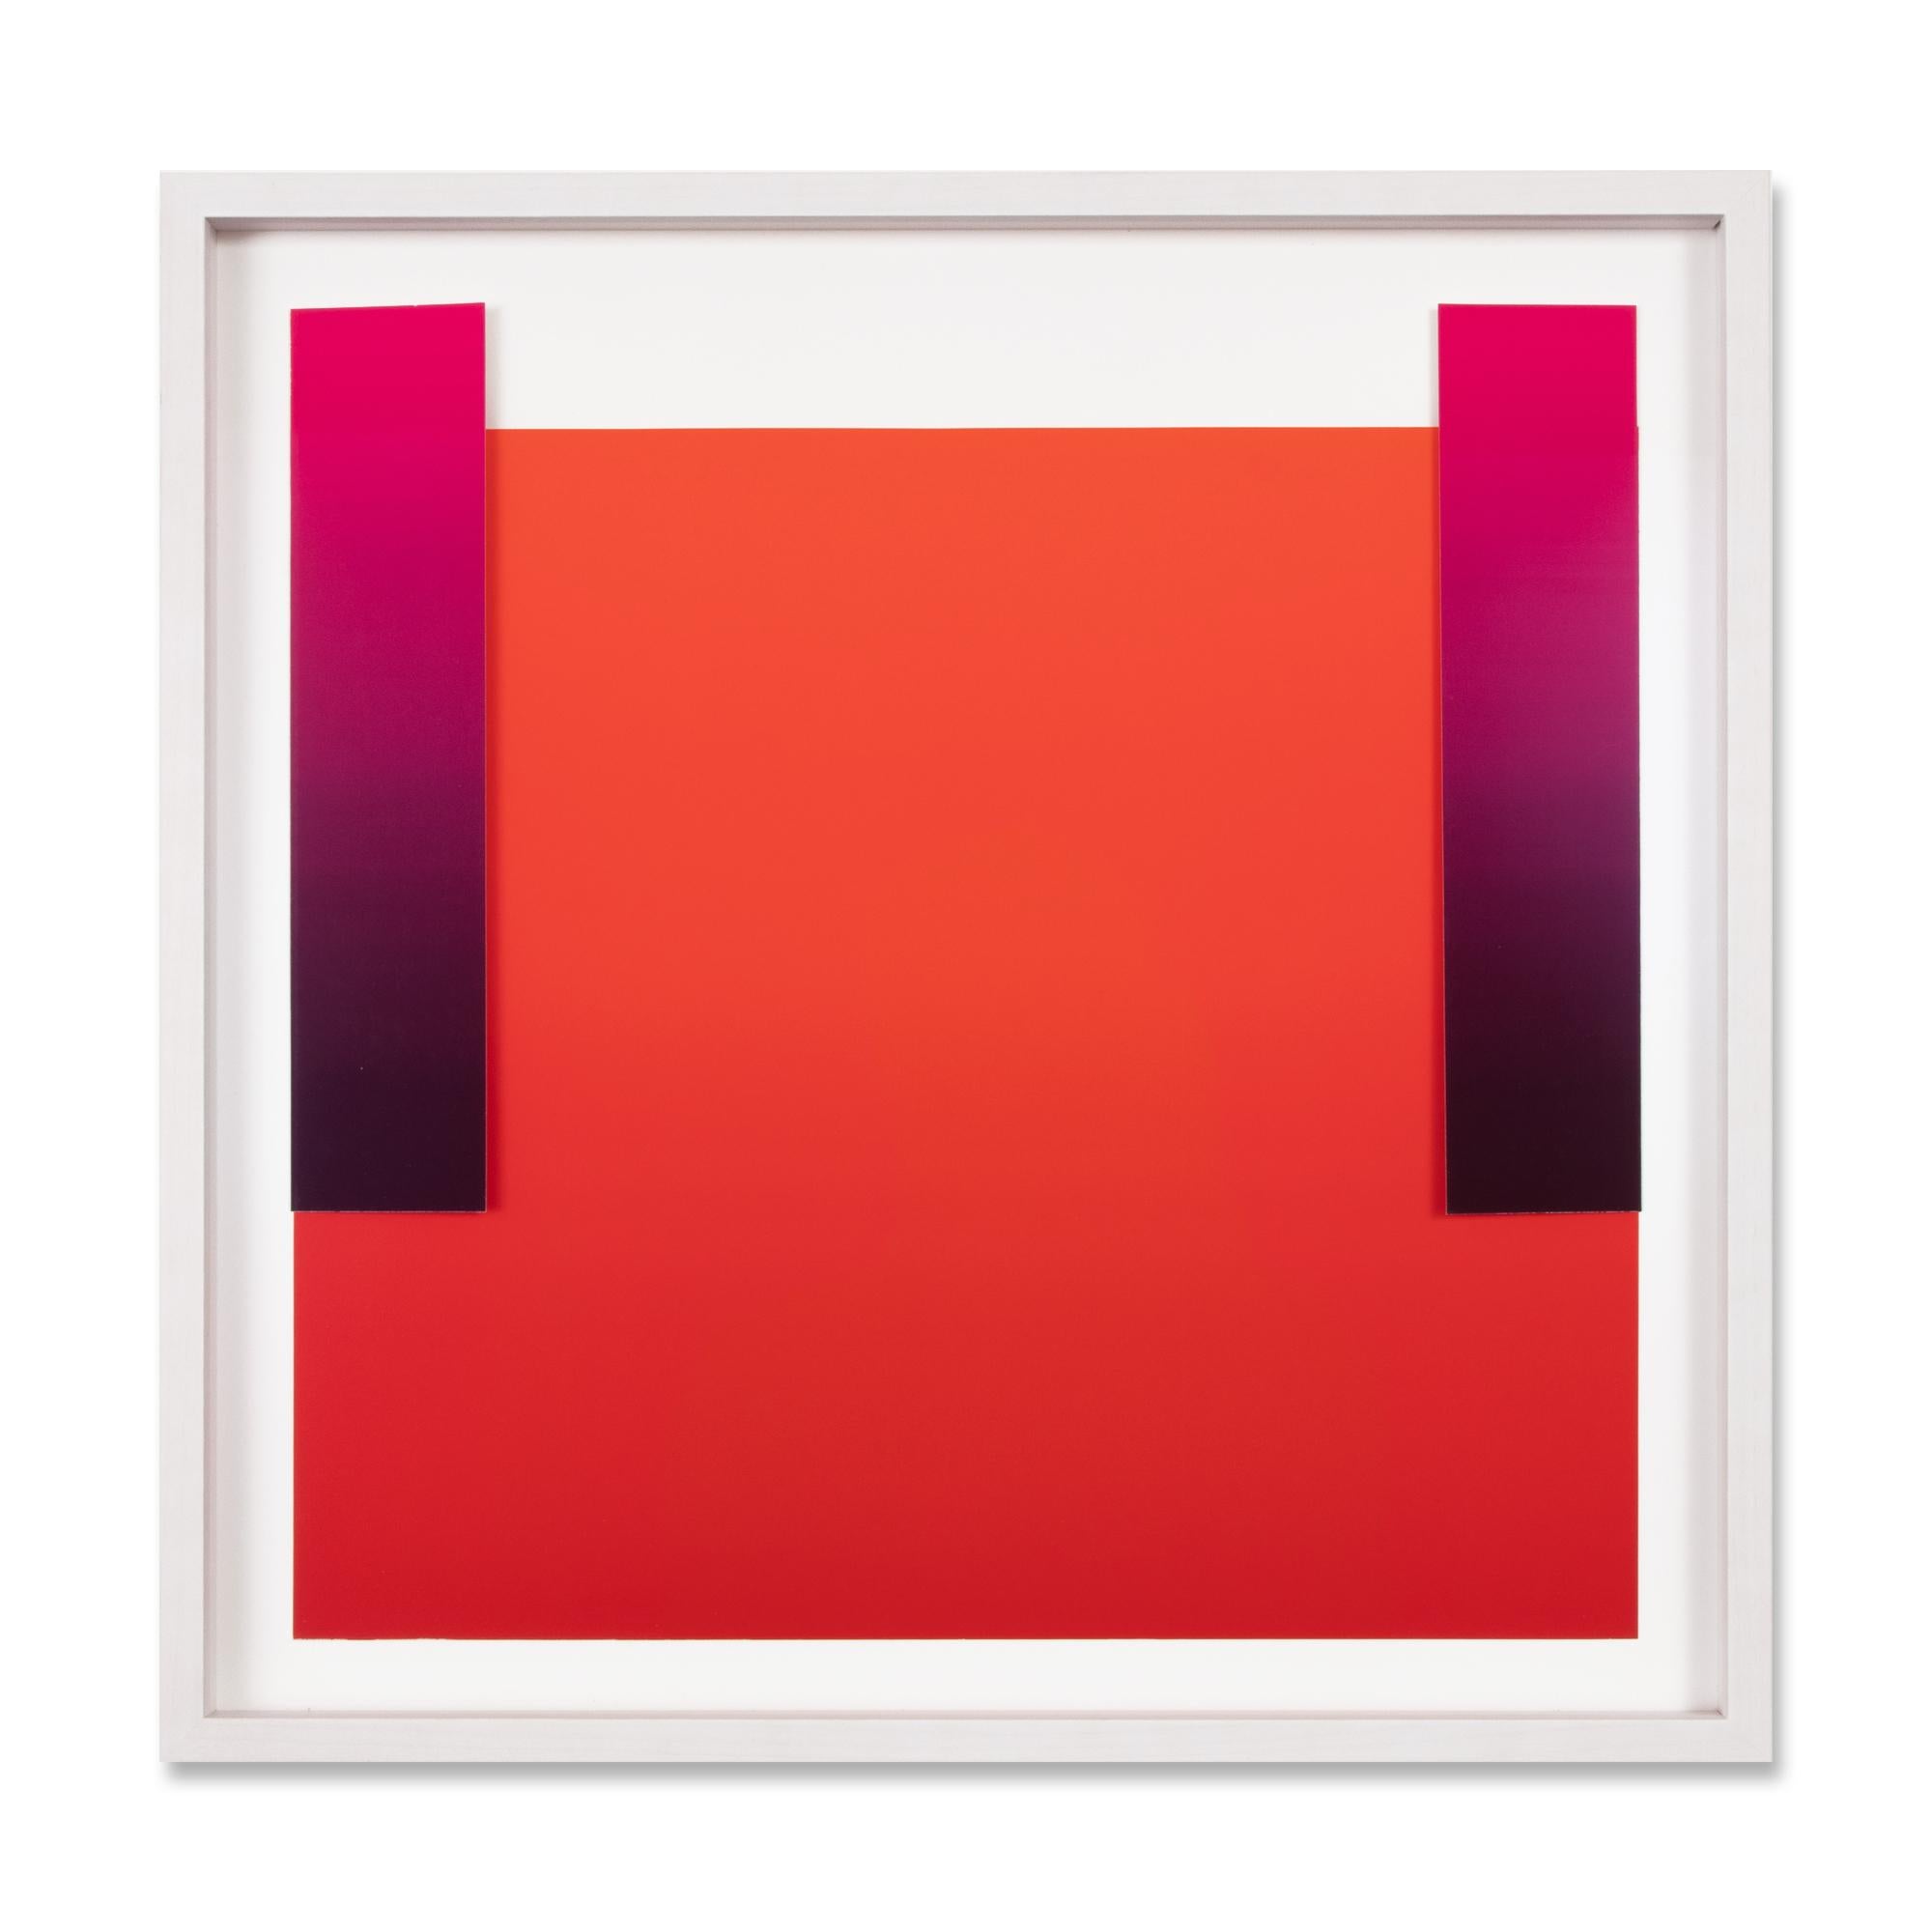 Rupprecht Geiger Abstract Print - Warm and Cold Reds, Abstract Art, Minimalism, Modern Art, 20th Century